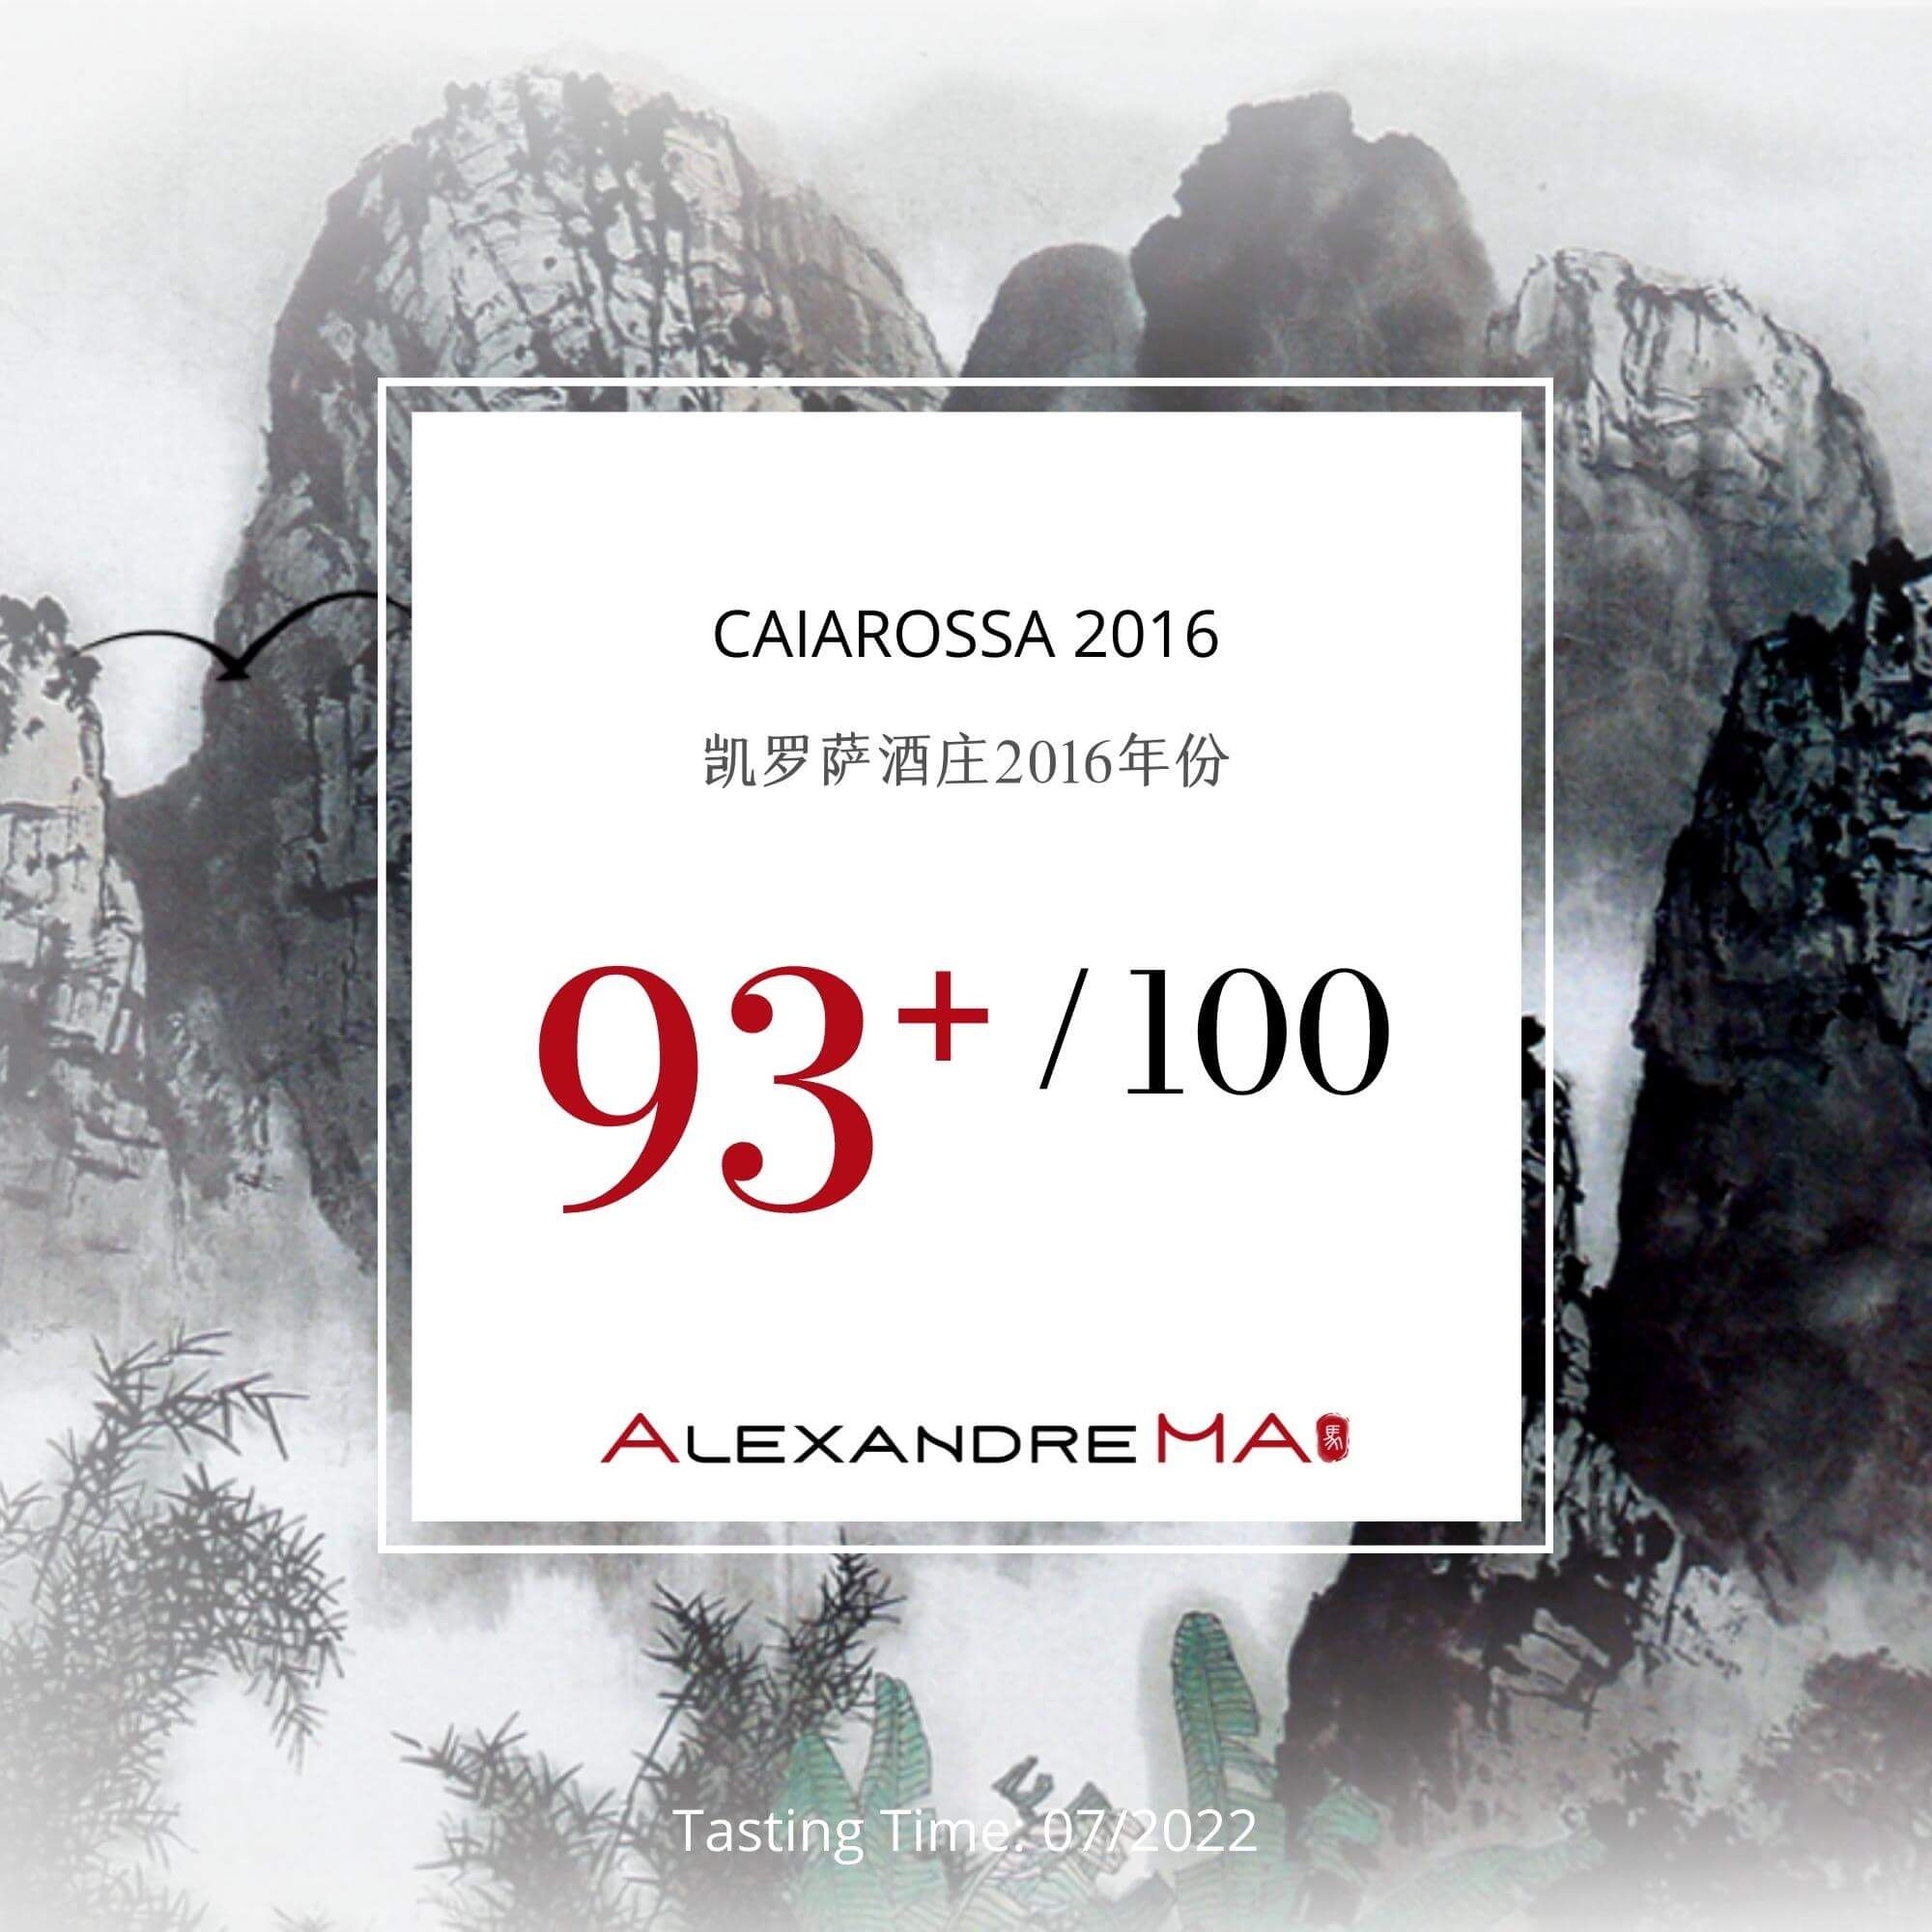 Caiarossa 2016 - Alexandre MA